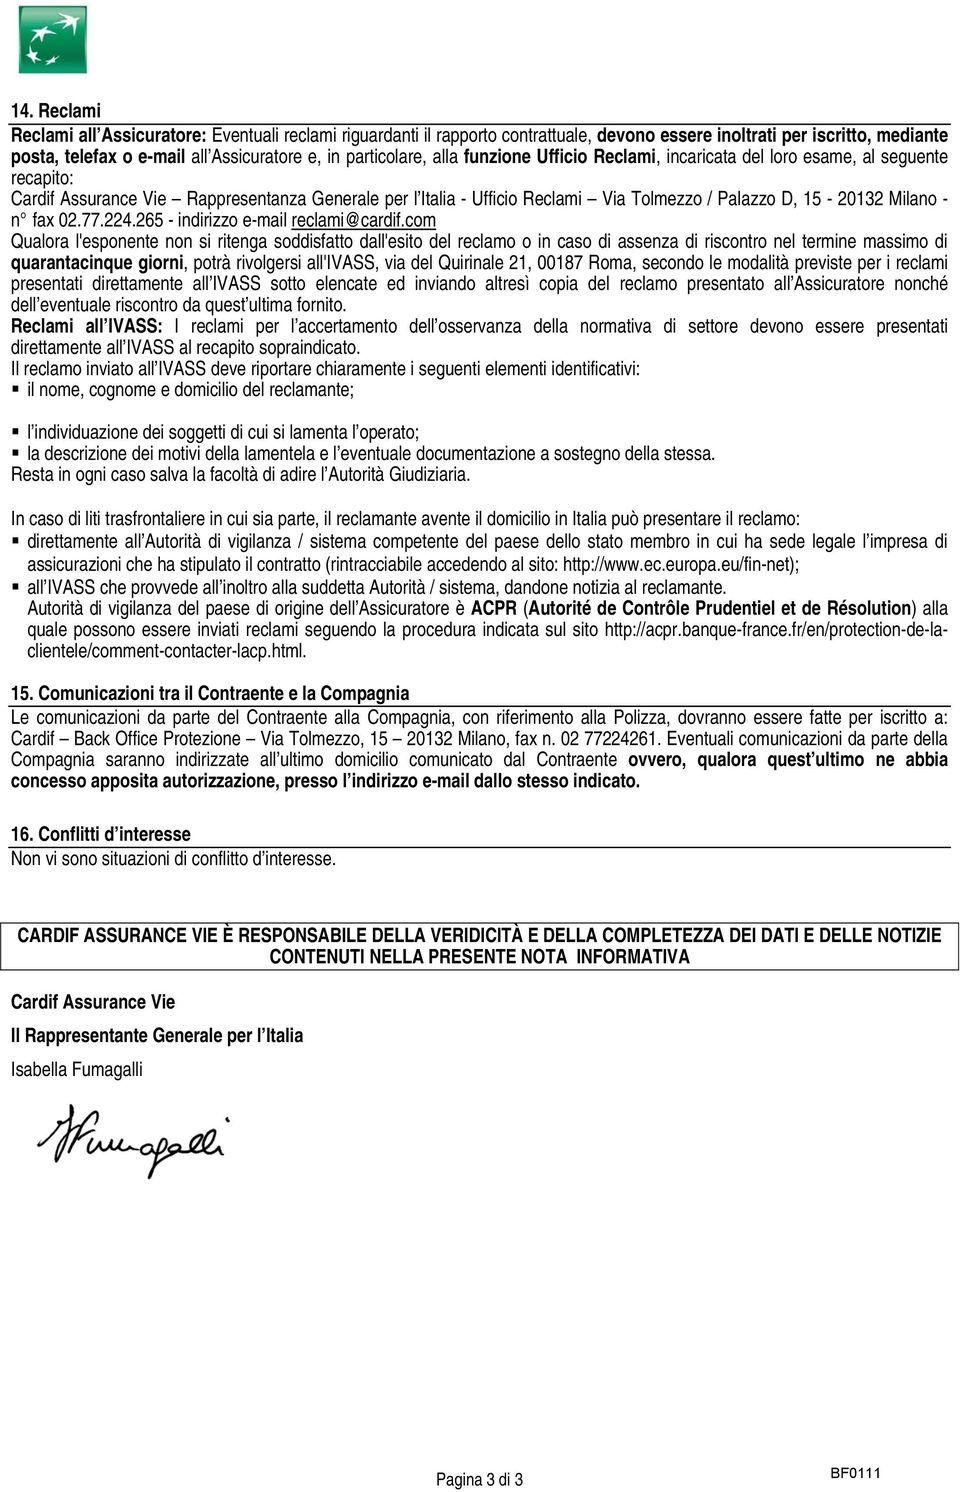 15-20132 Milano - n fax 02.77.224.265 - indirizzo e-mail reclami@cardif.